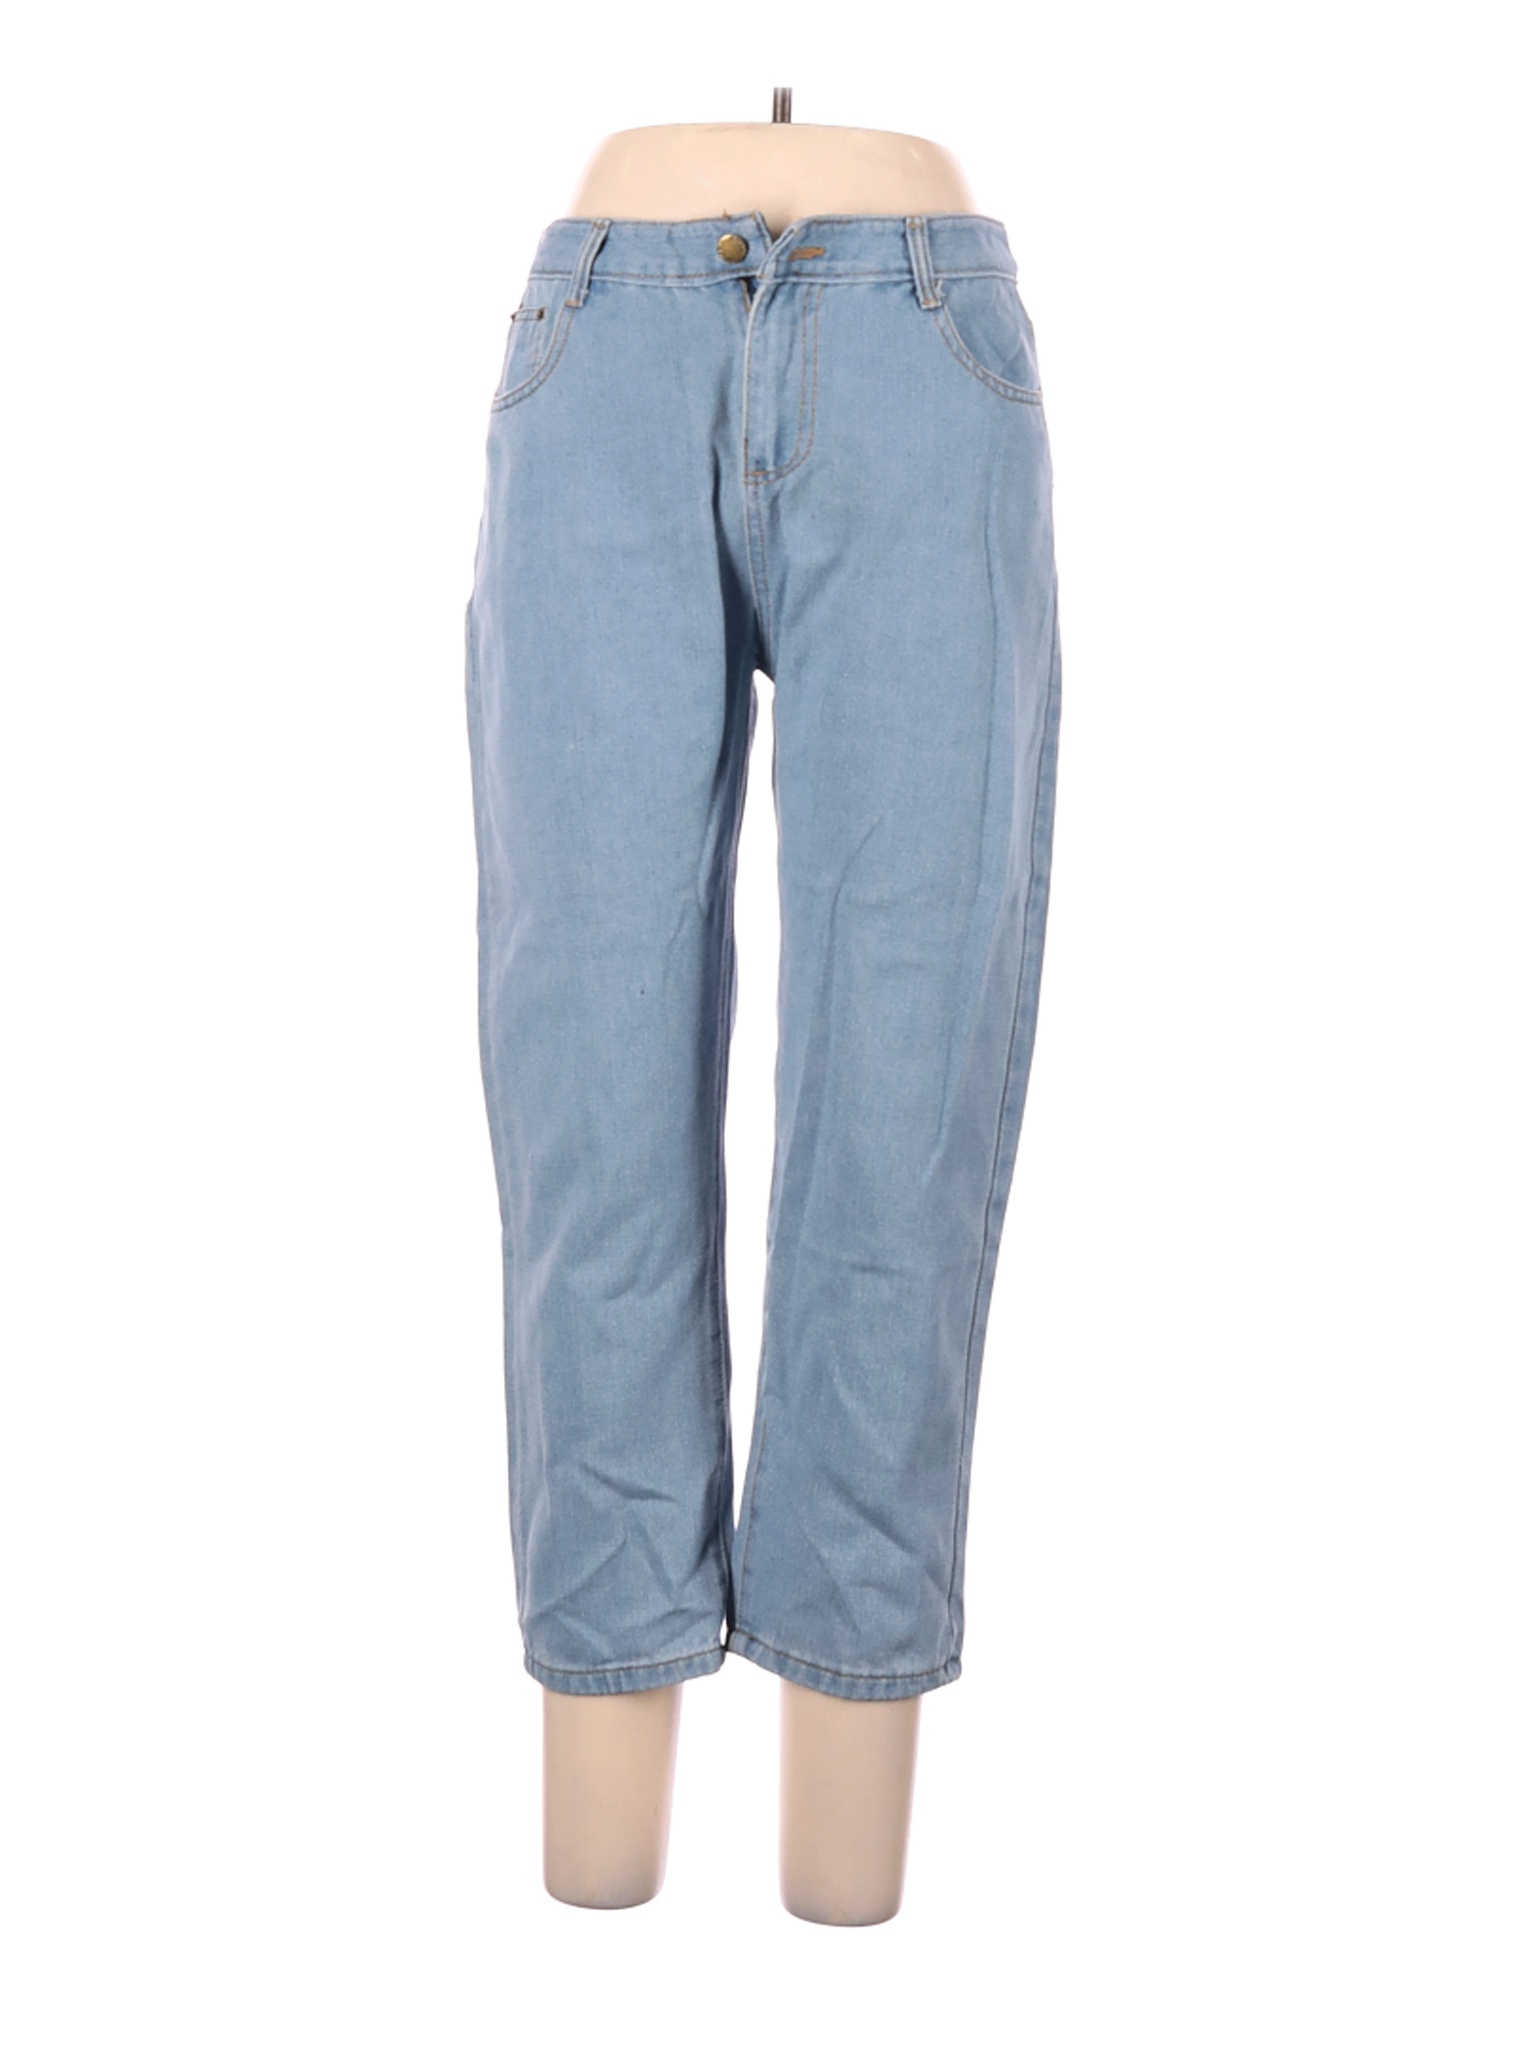 NWT Heritage Falmer Women Blue Jeans 2X Plus | eBay